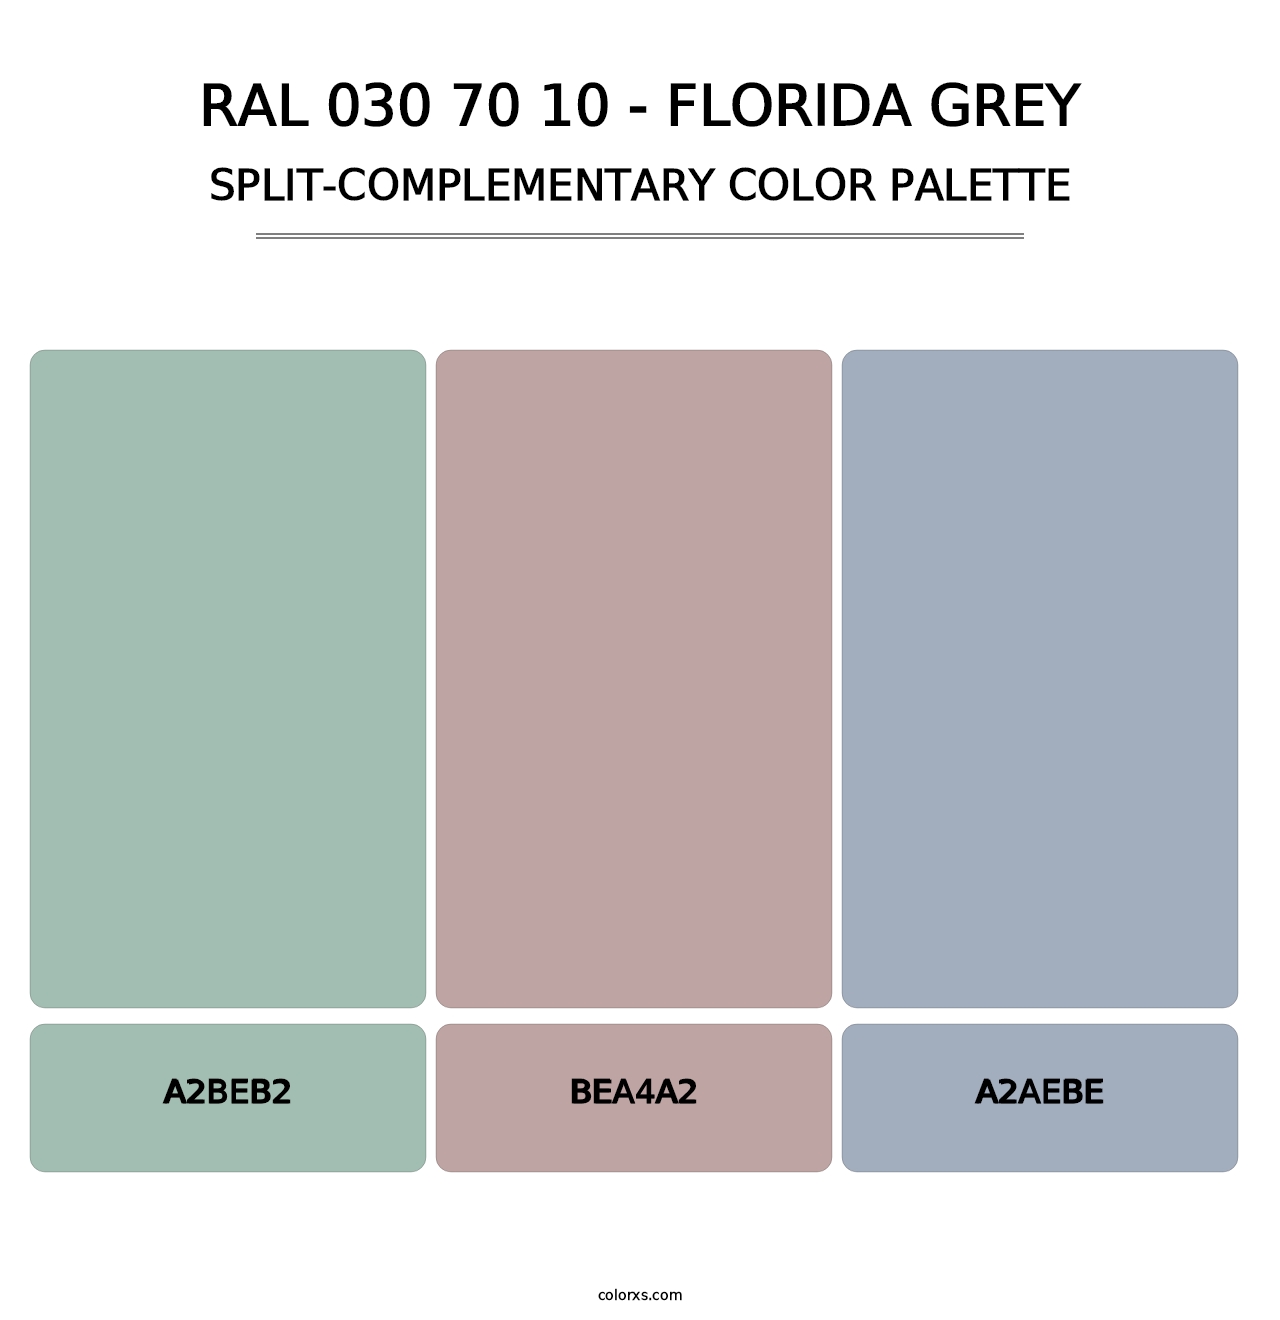 RAL 030 70 10 - Florida Grey - Split-Complementary Color Palette